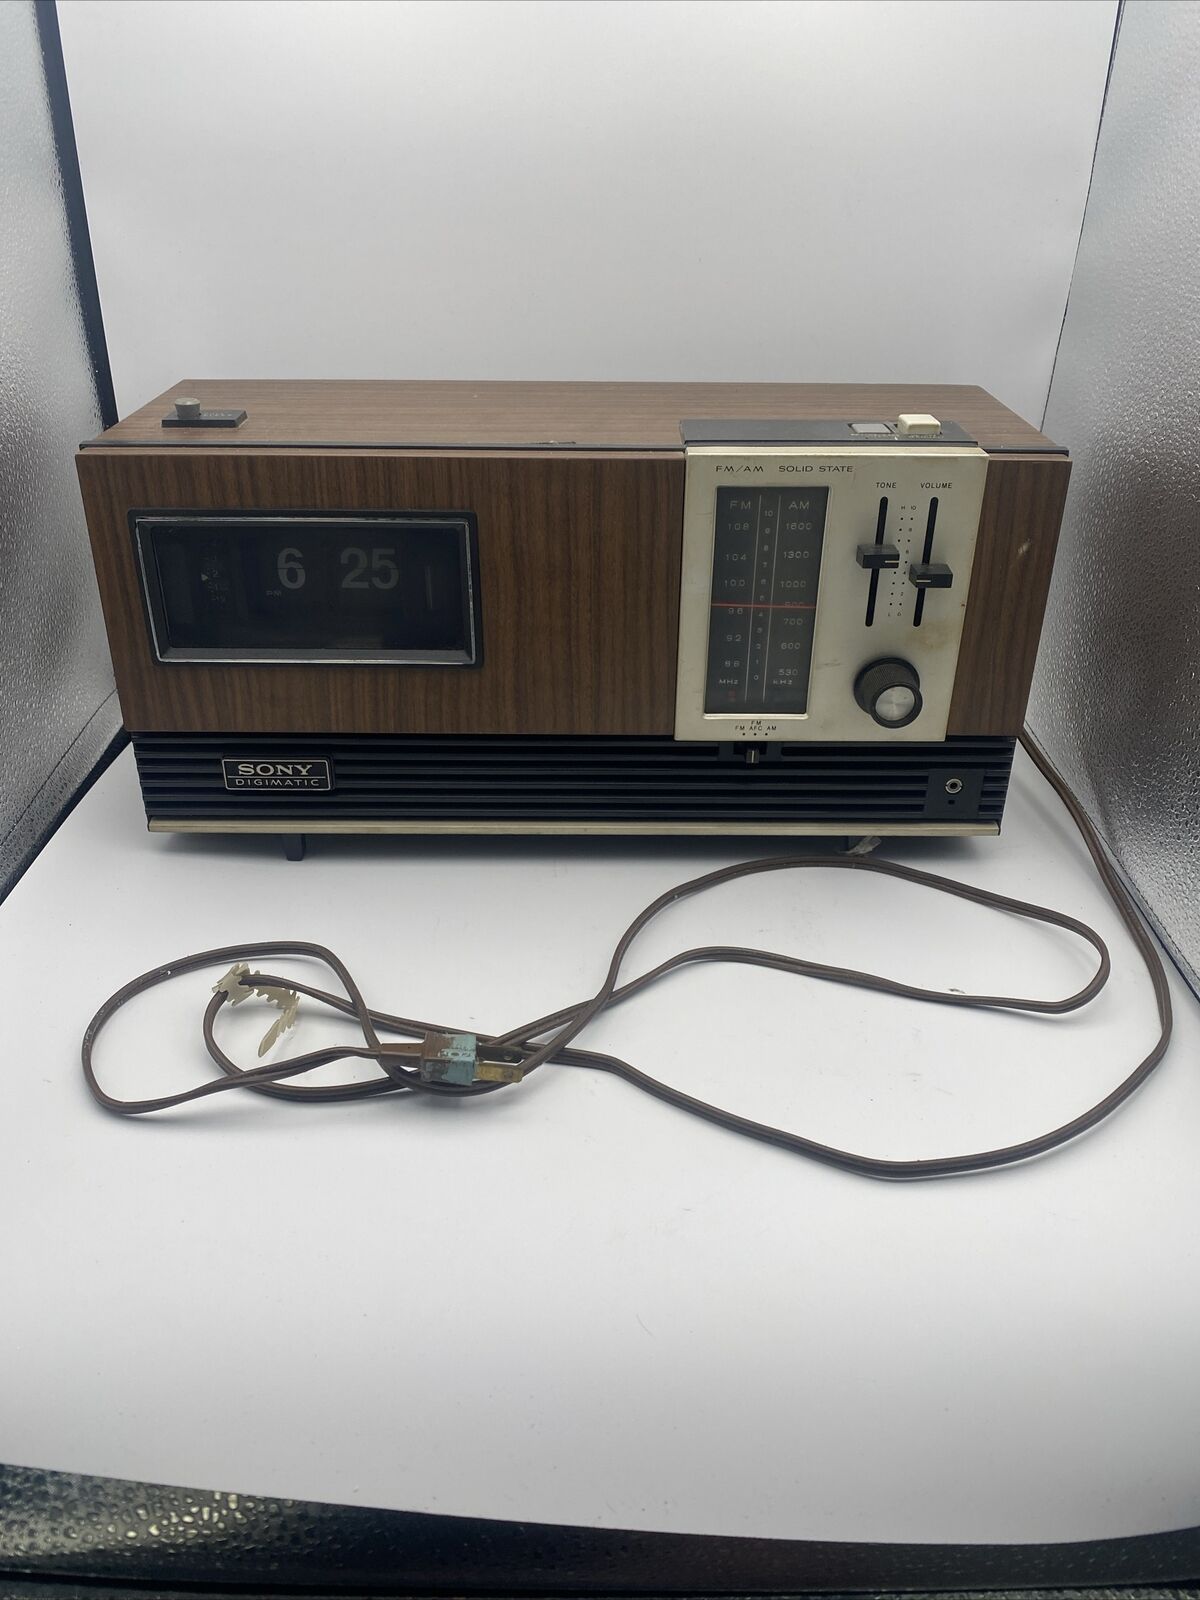 Sony Flip Clock Alarm Vintage Kitchen Radio Danish Style